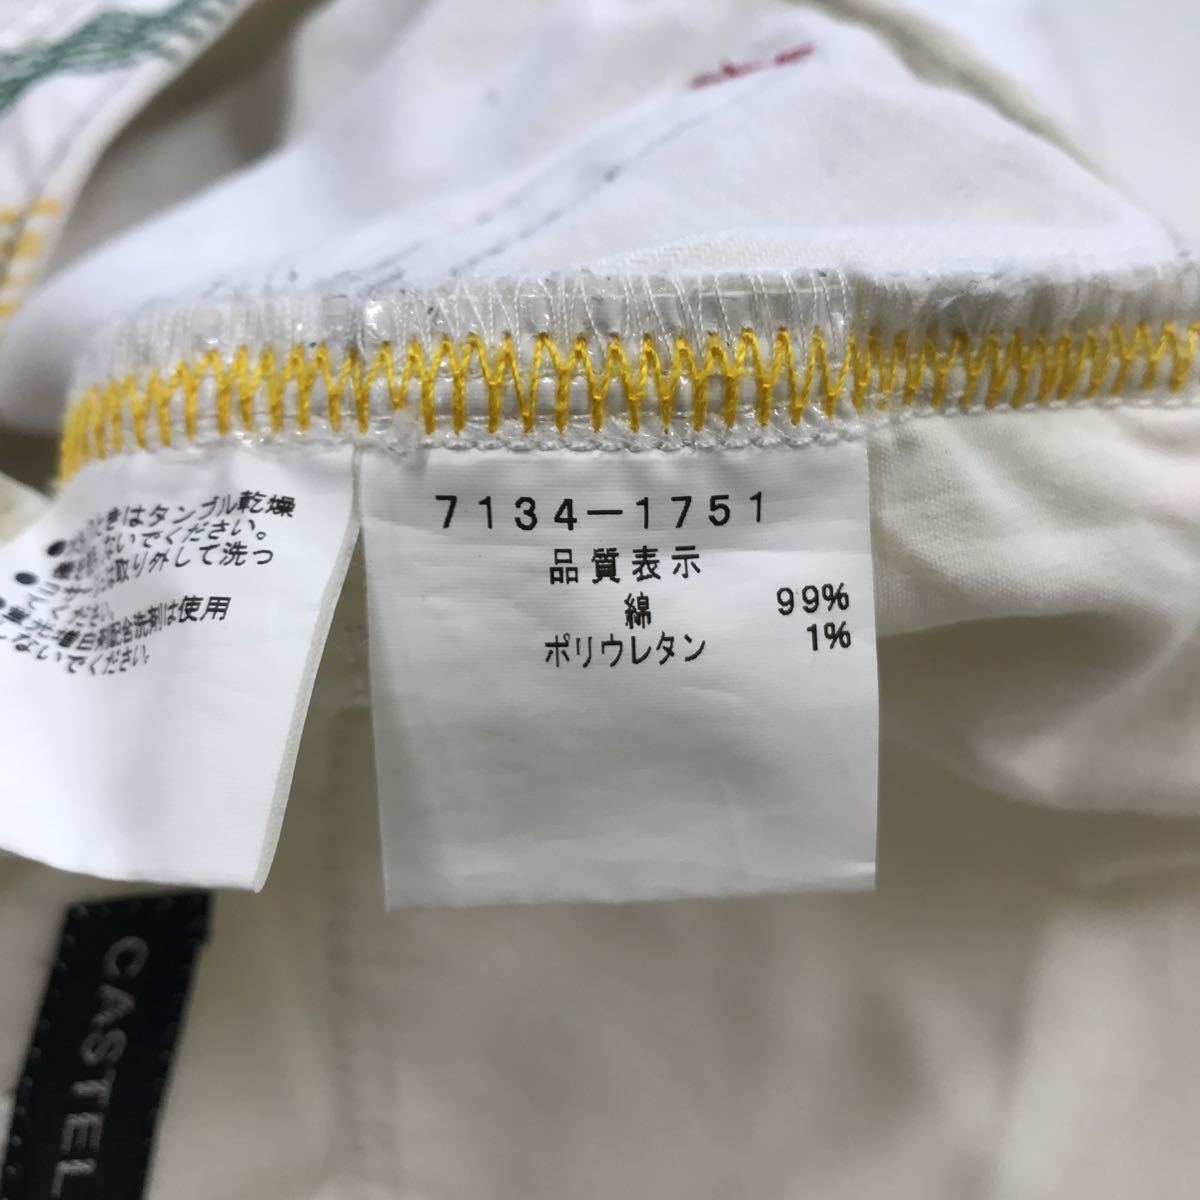 CASTEL BAJAC Castelbajac white Denim pants stretch embroidery lady's 9 number M size 28-58a